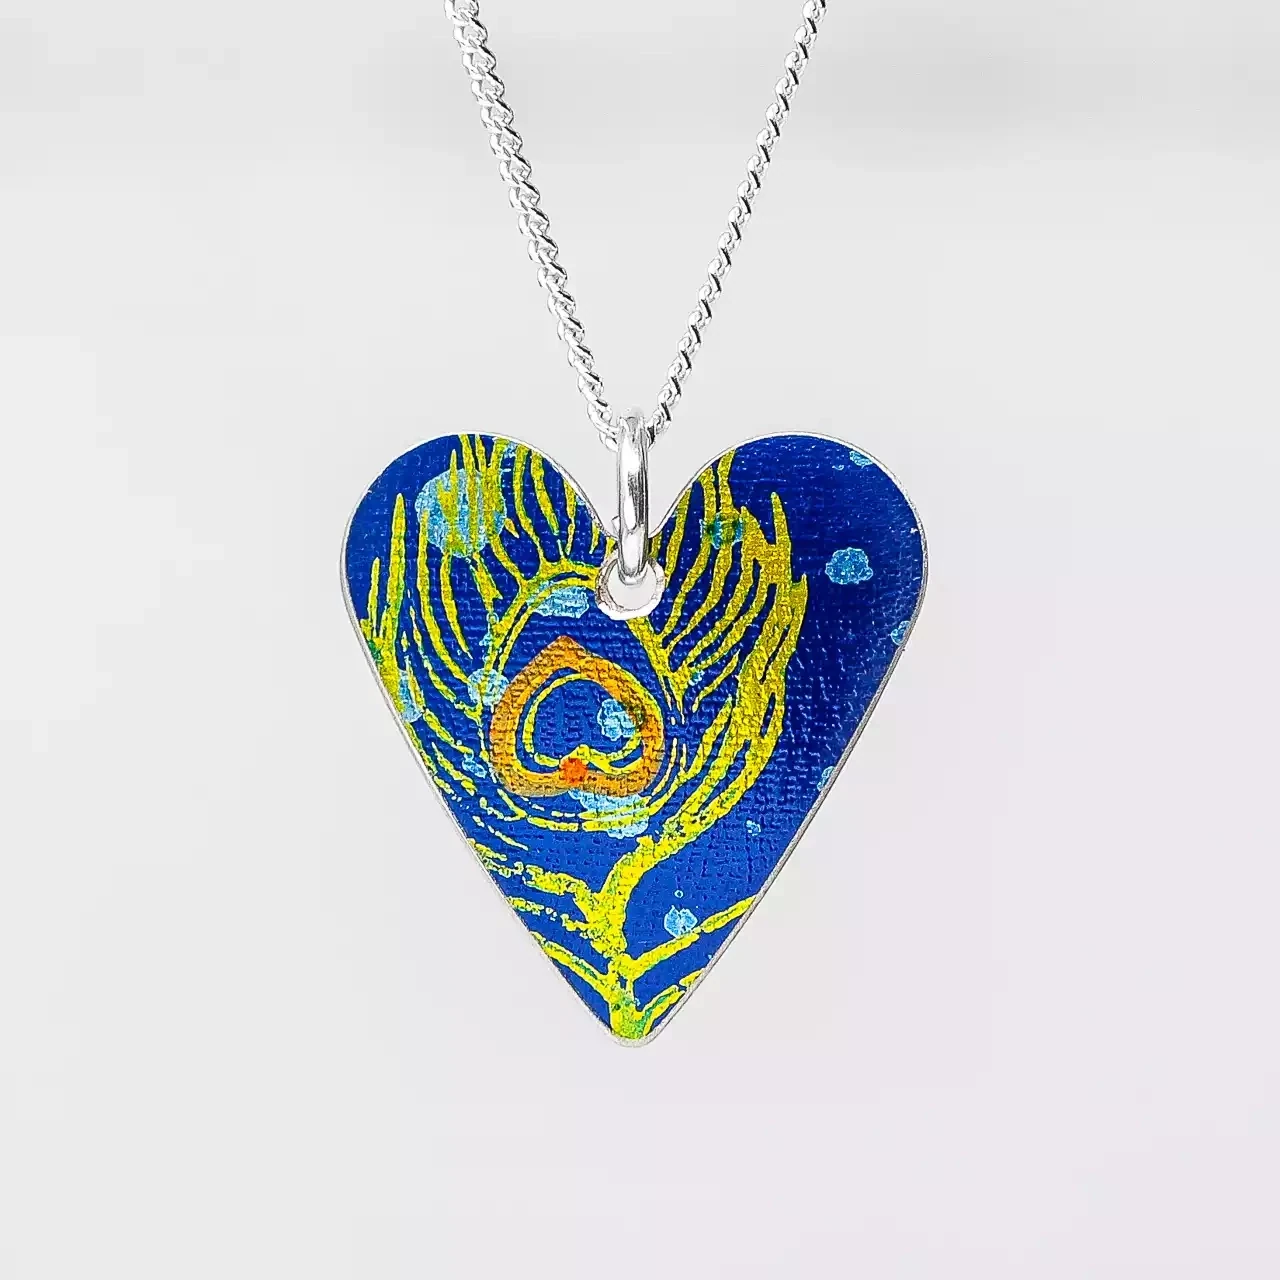 Peacock Heart Pendant by Hazel Atkinson